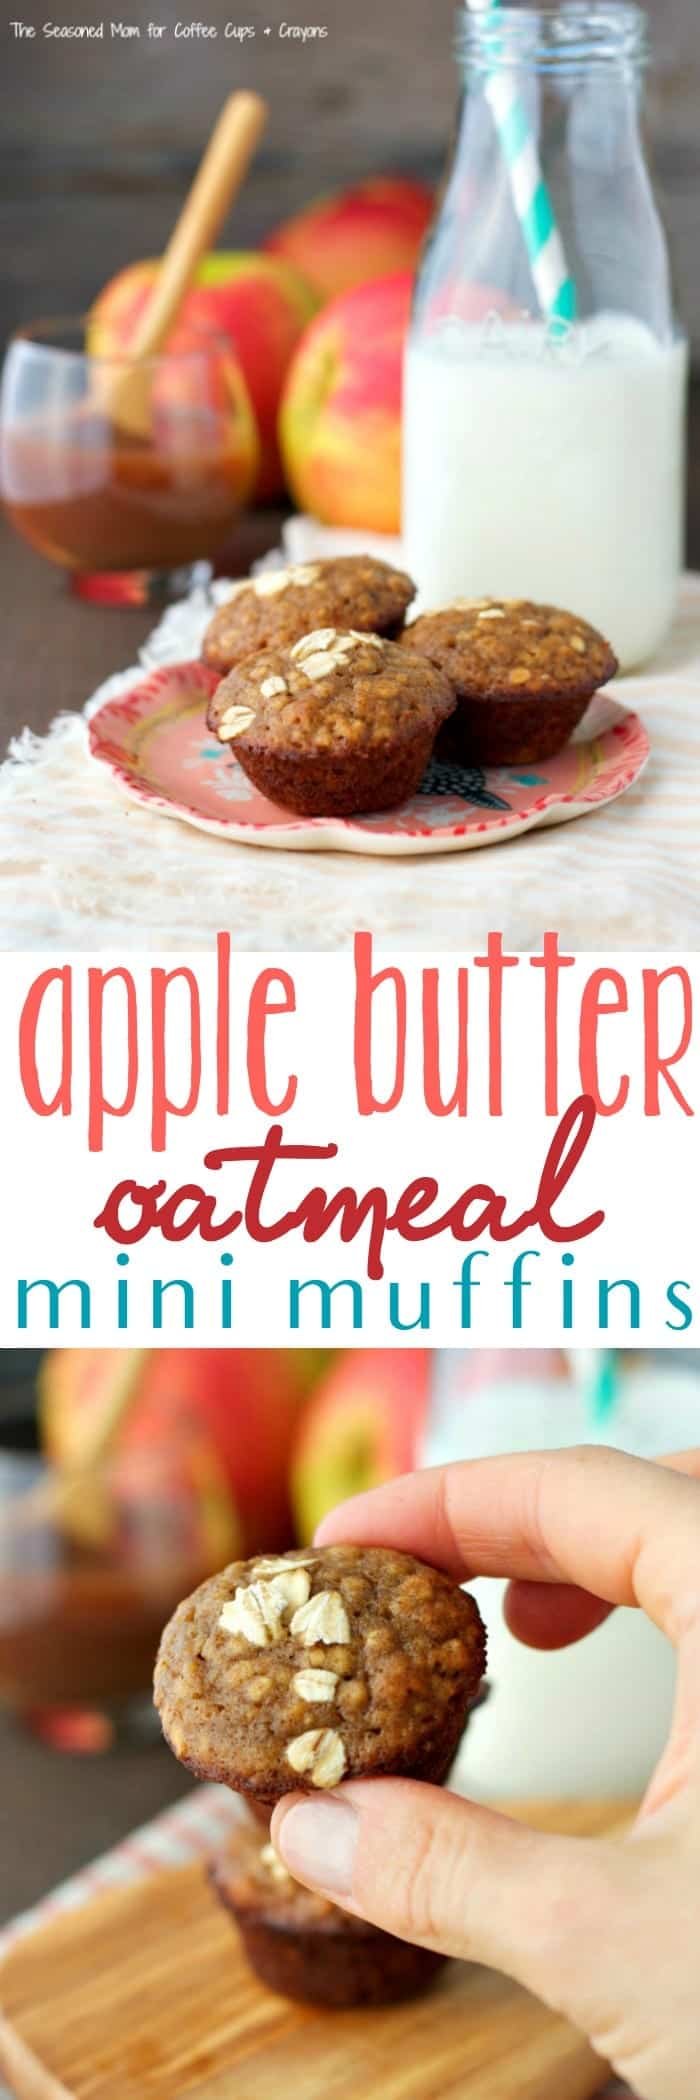 Apple Butter Oatmeal Mini Muffins